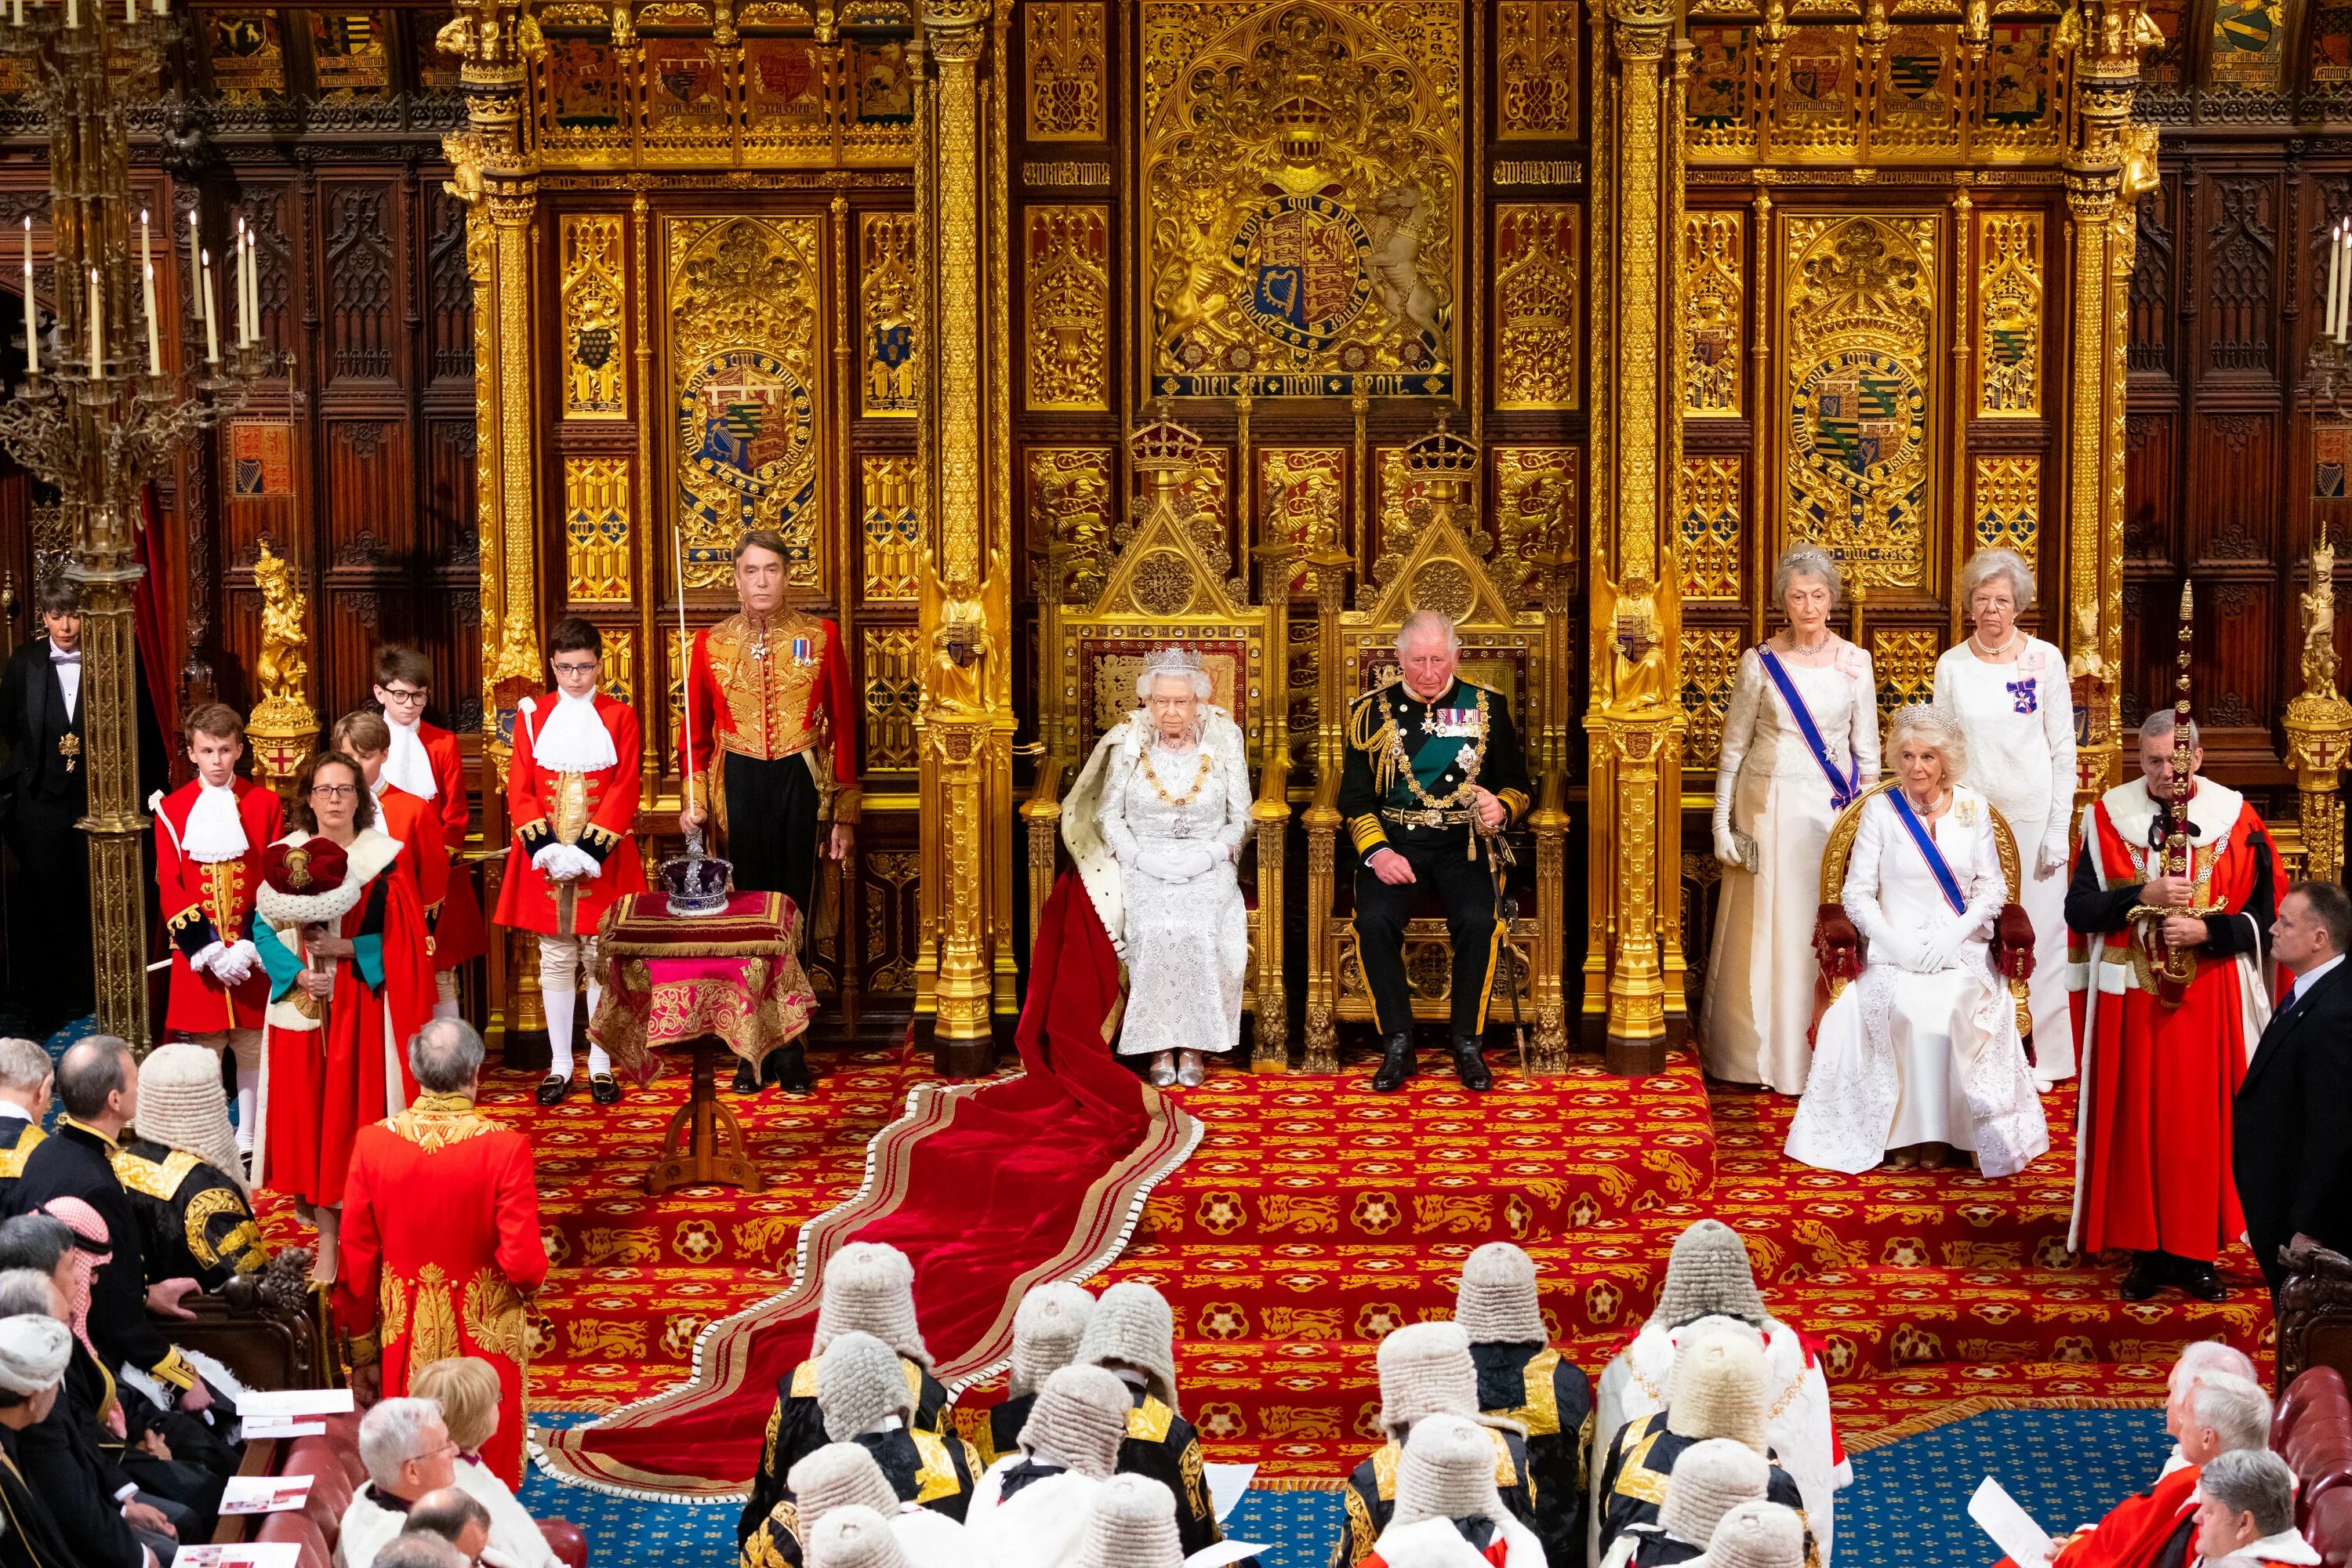 The State Opening of Parliament Великобритании. Королевская монархия Великобритании. Титул монарха главы государства